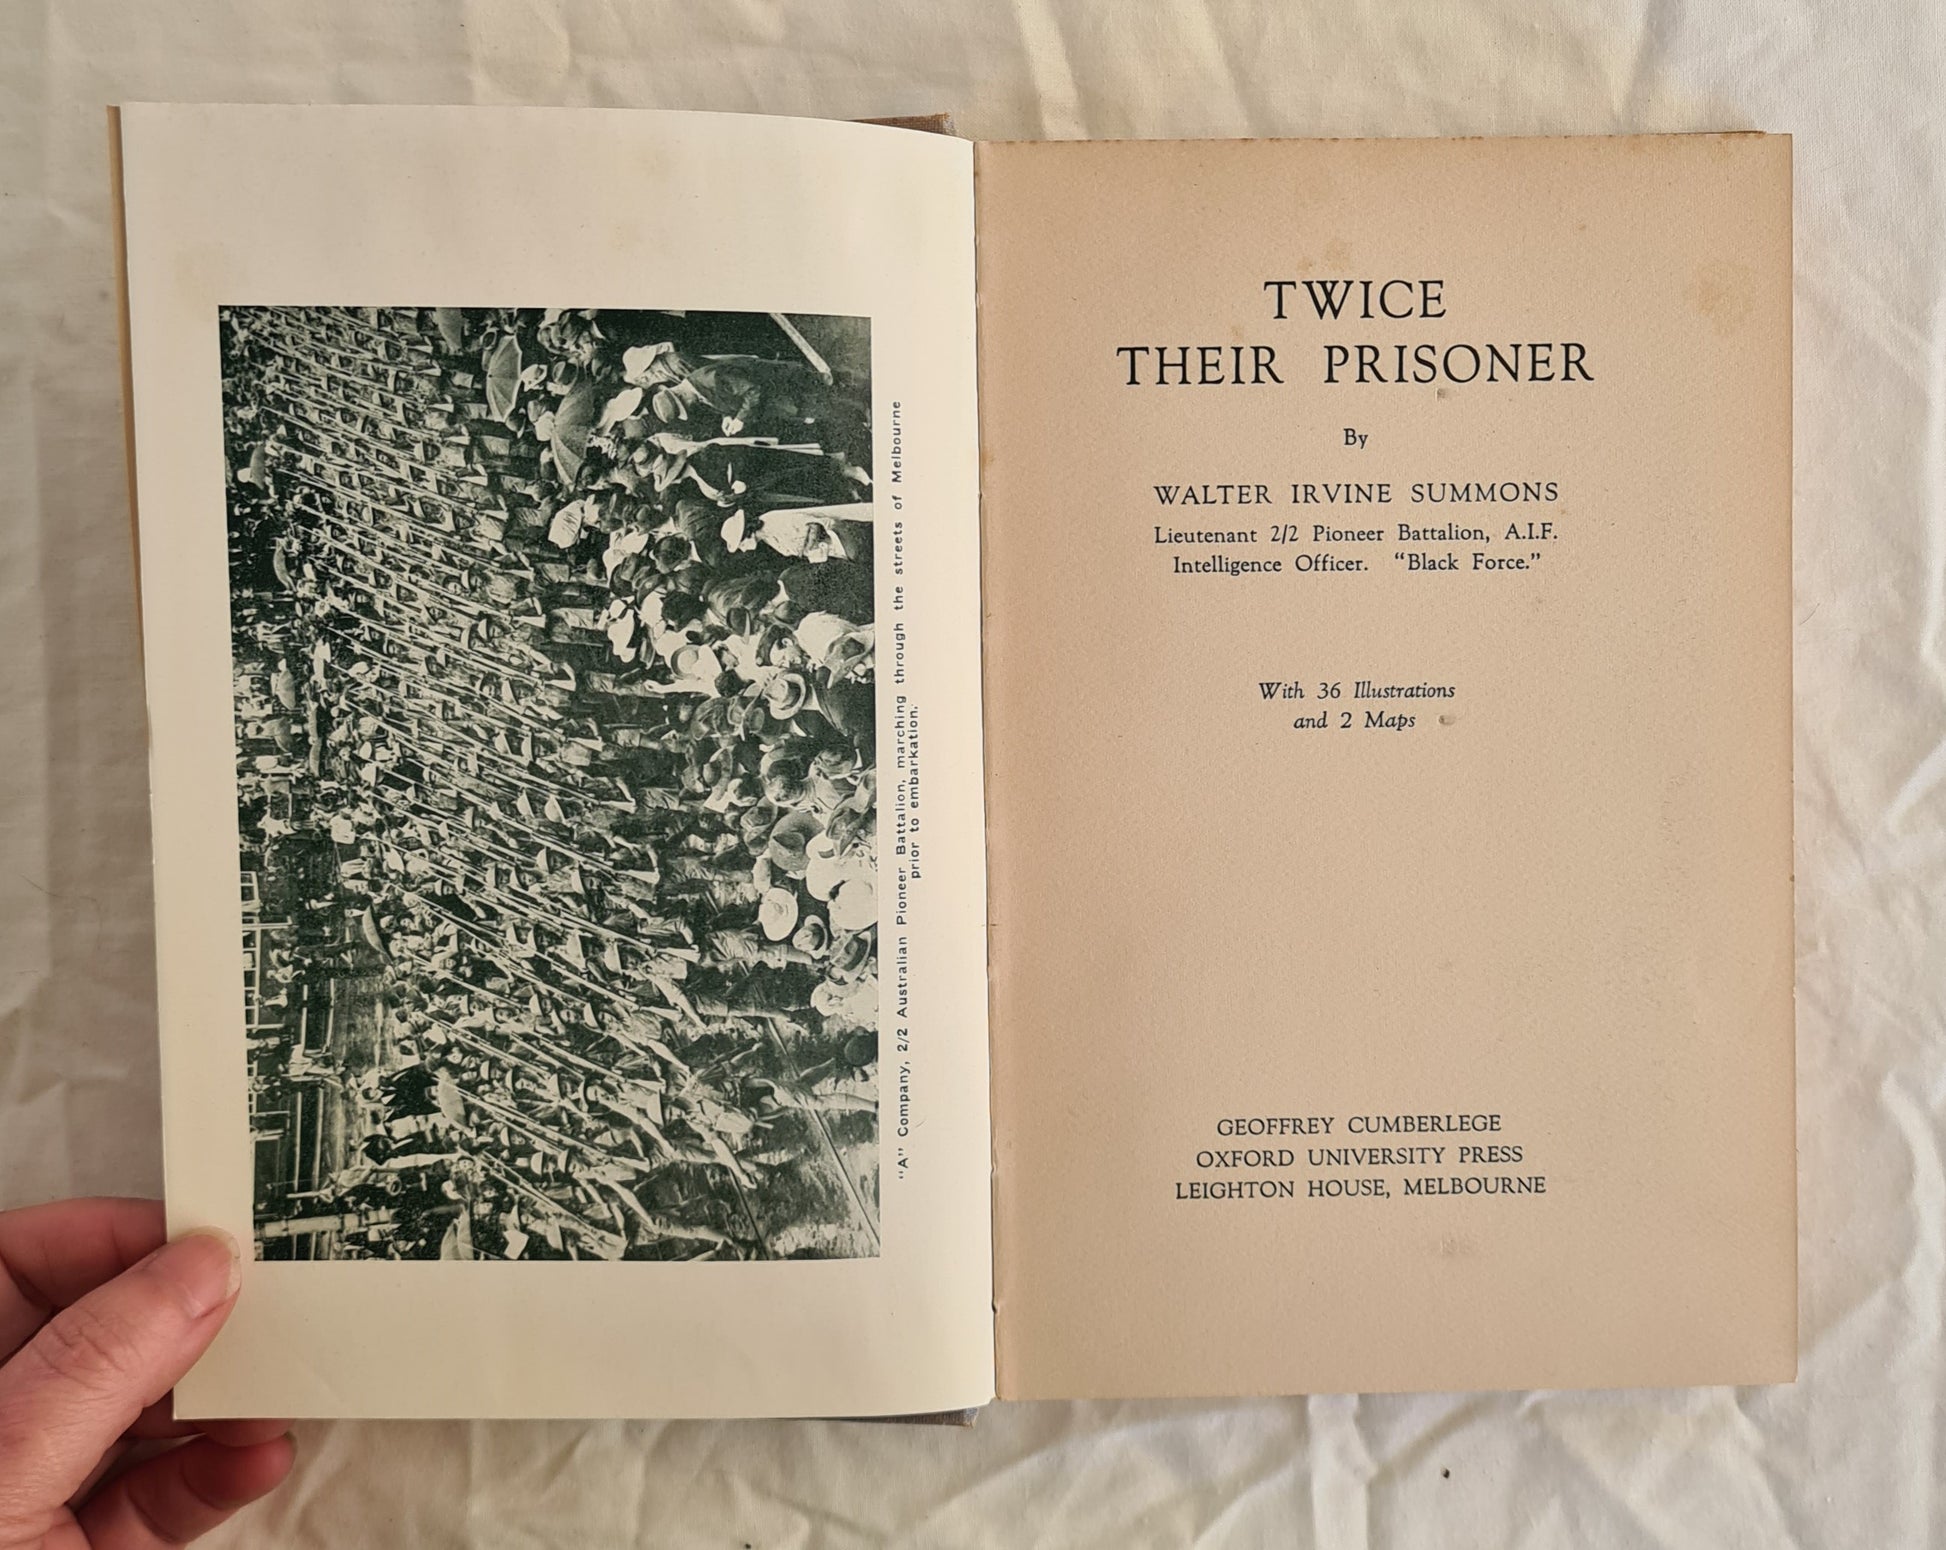 Twice Their Prisoner by Walter Irvine Summons